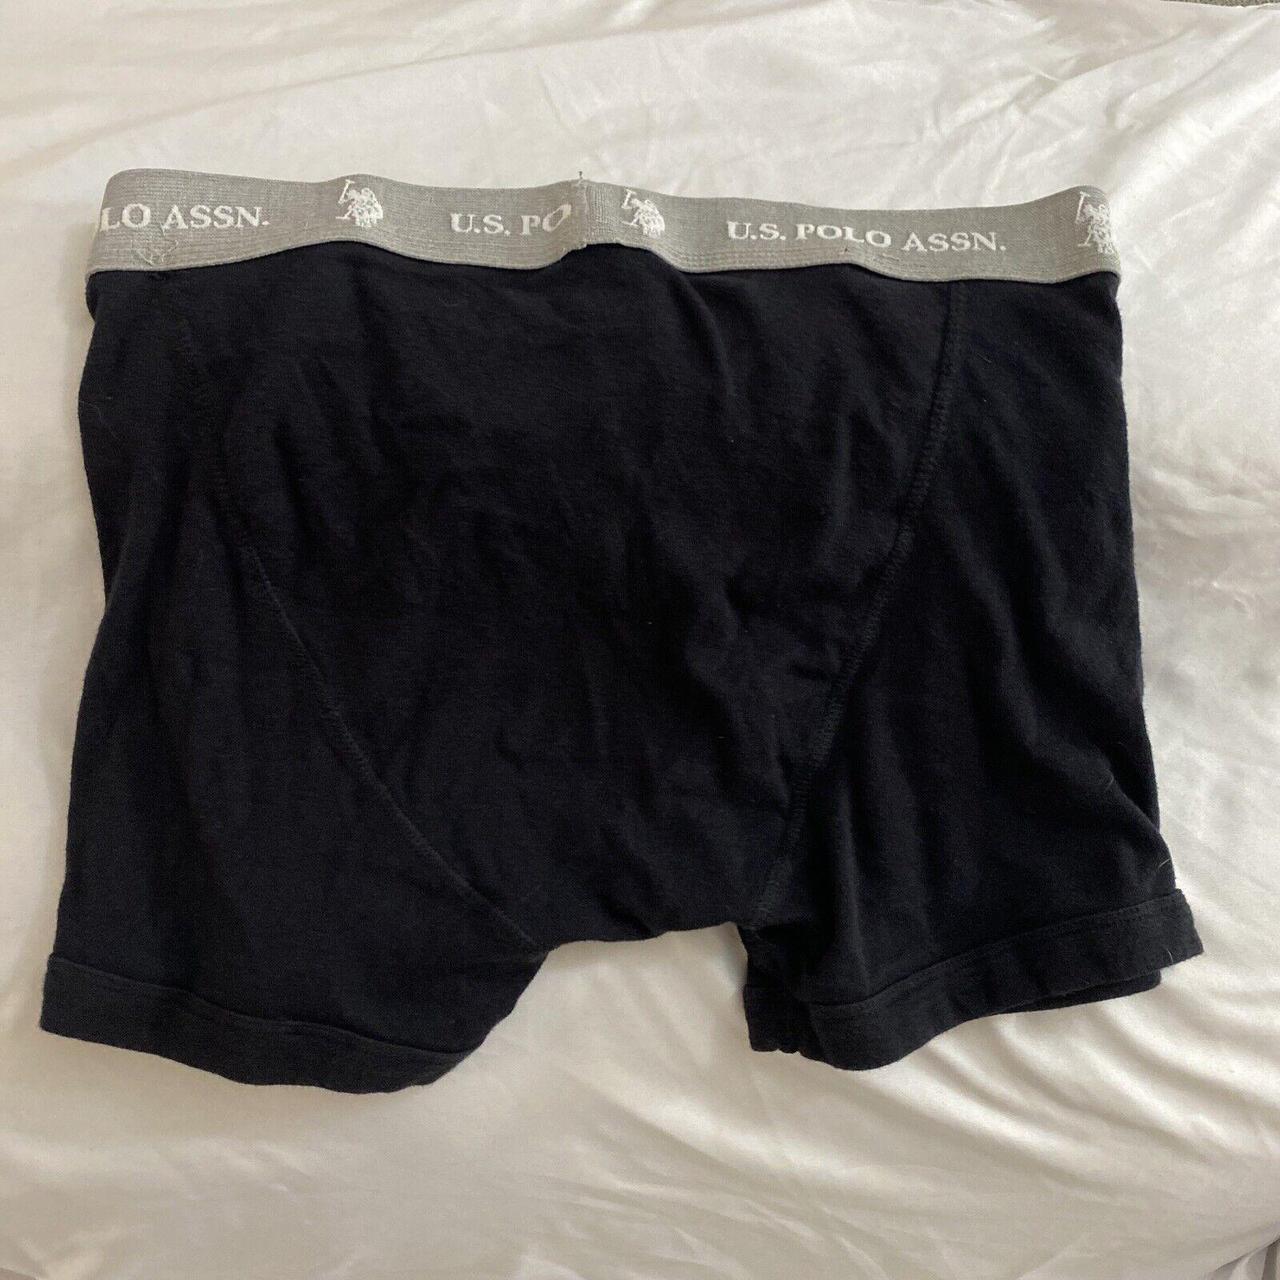 US POLO ASSN Underwear. - Depop